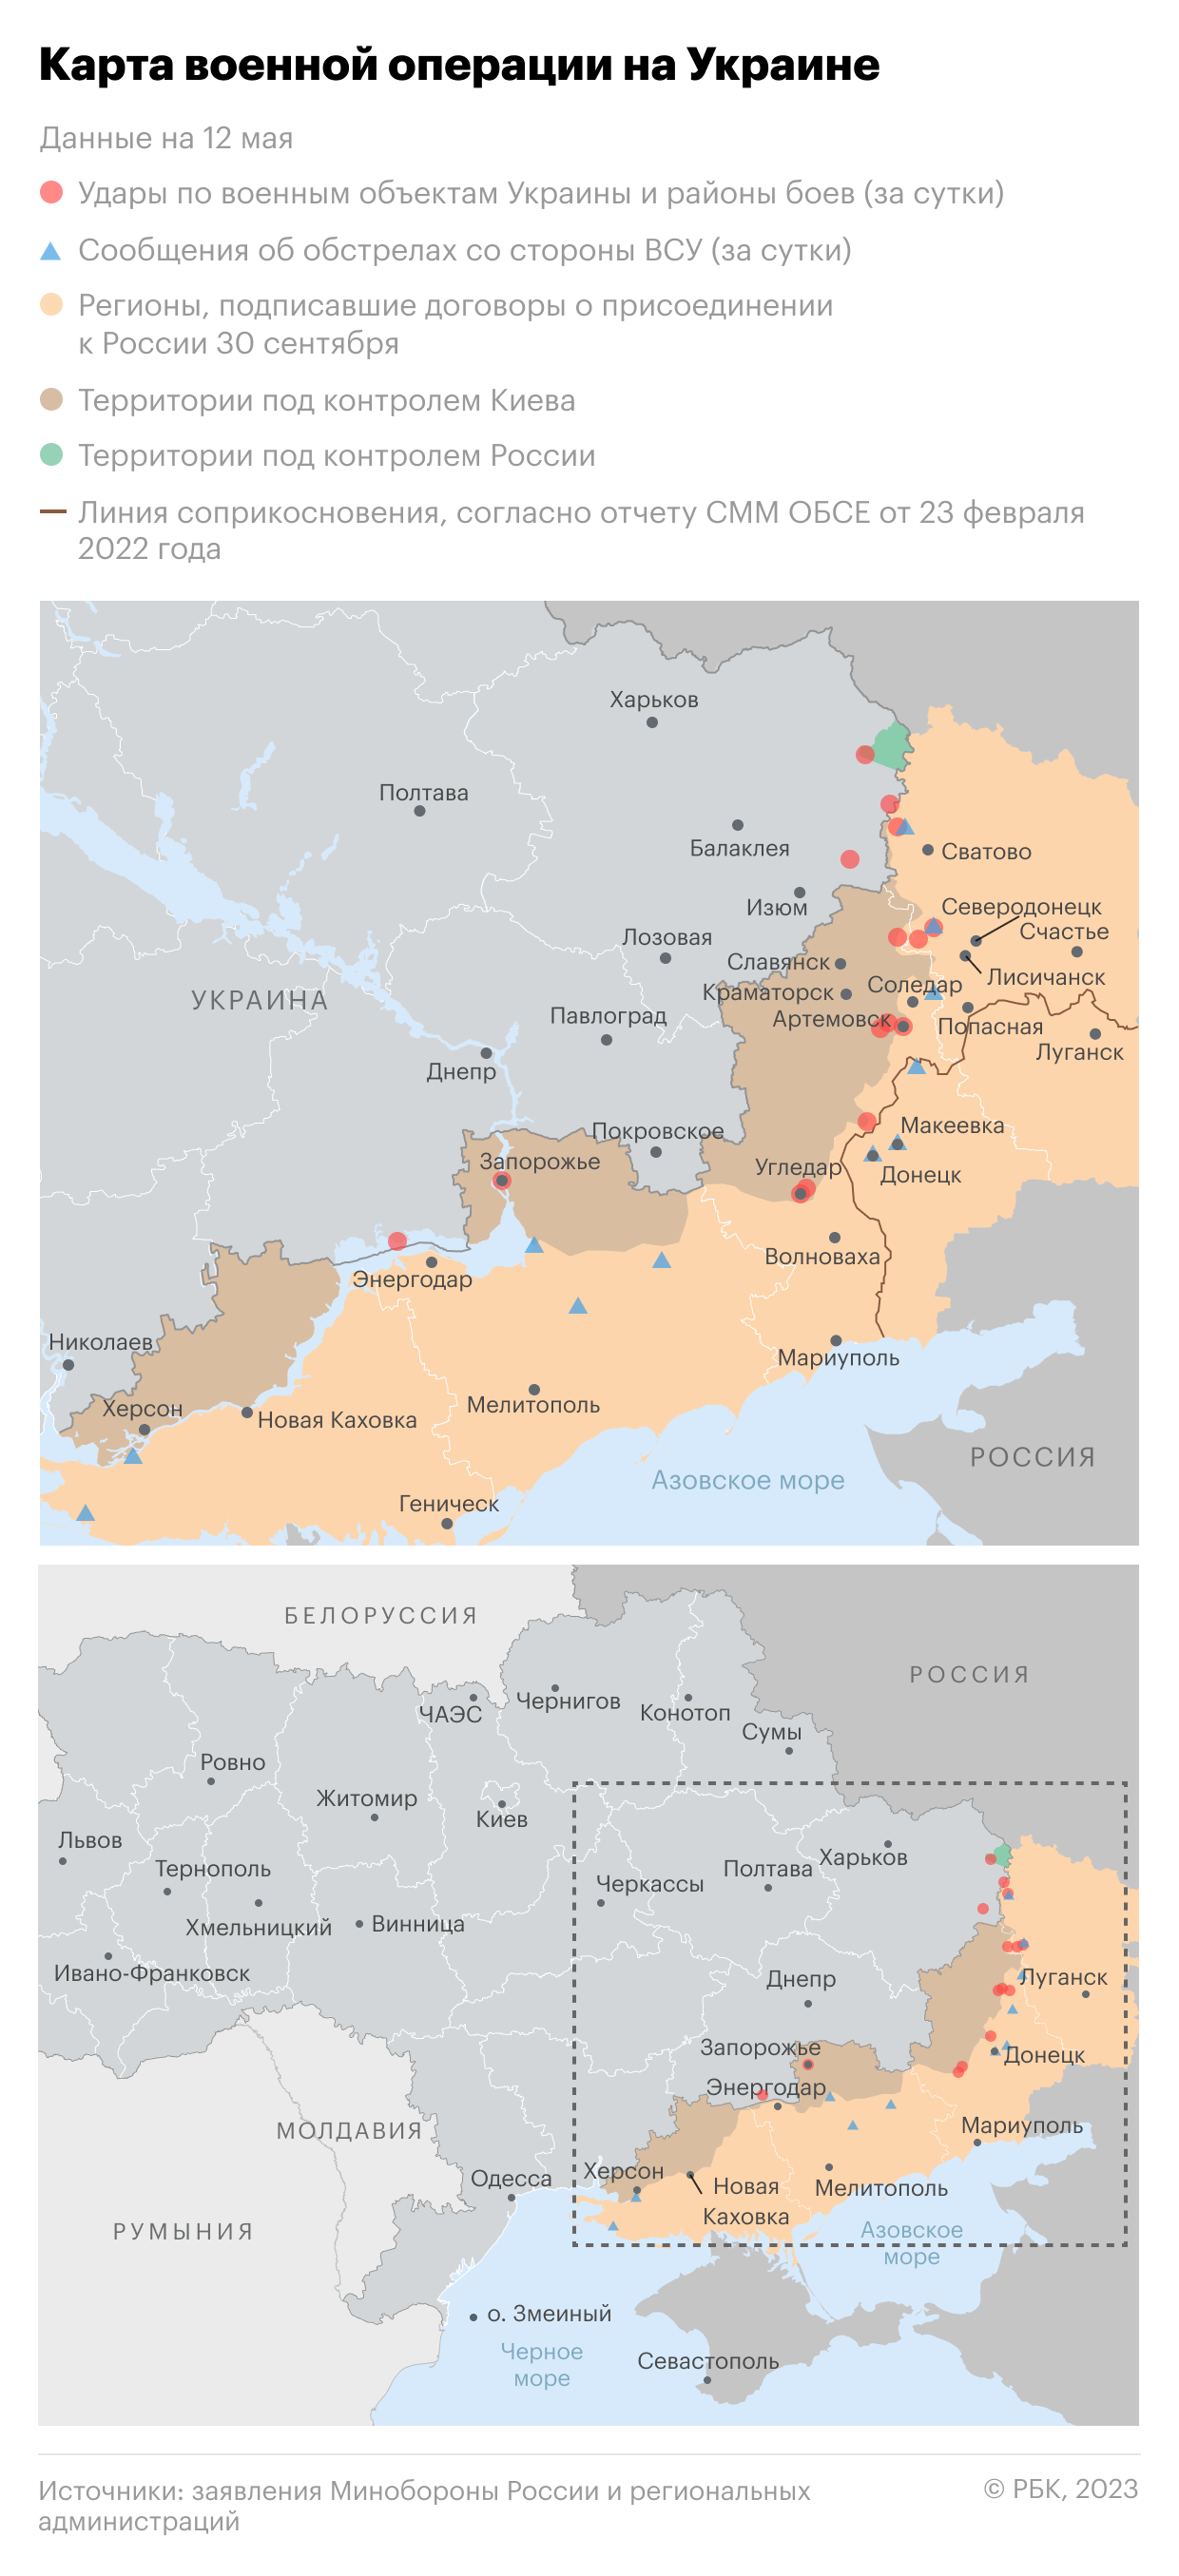 Военная операция на Украине. Карта на 12 мая